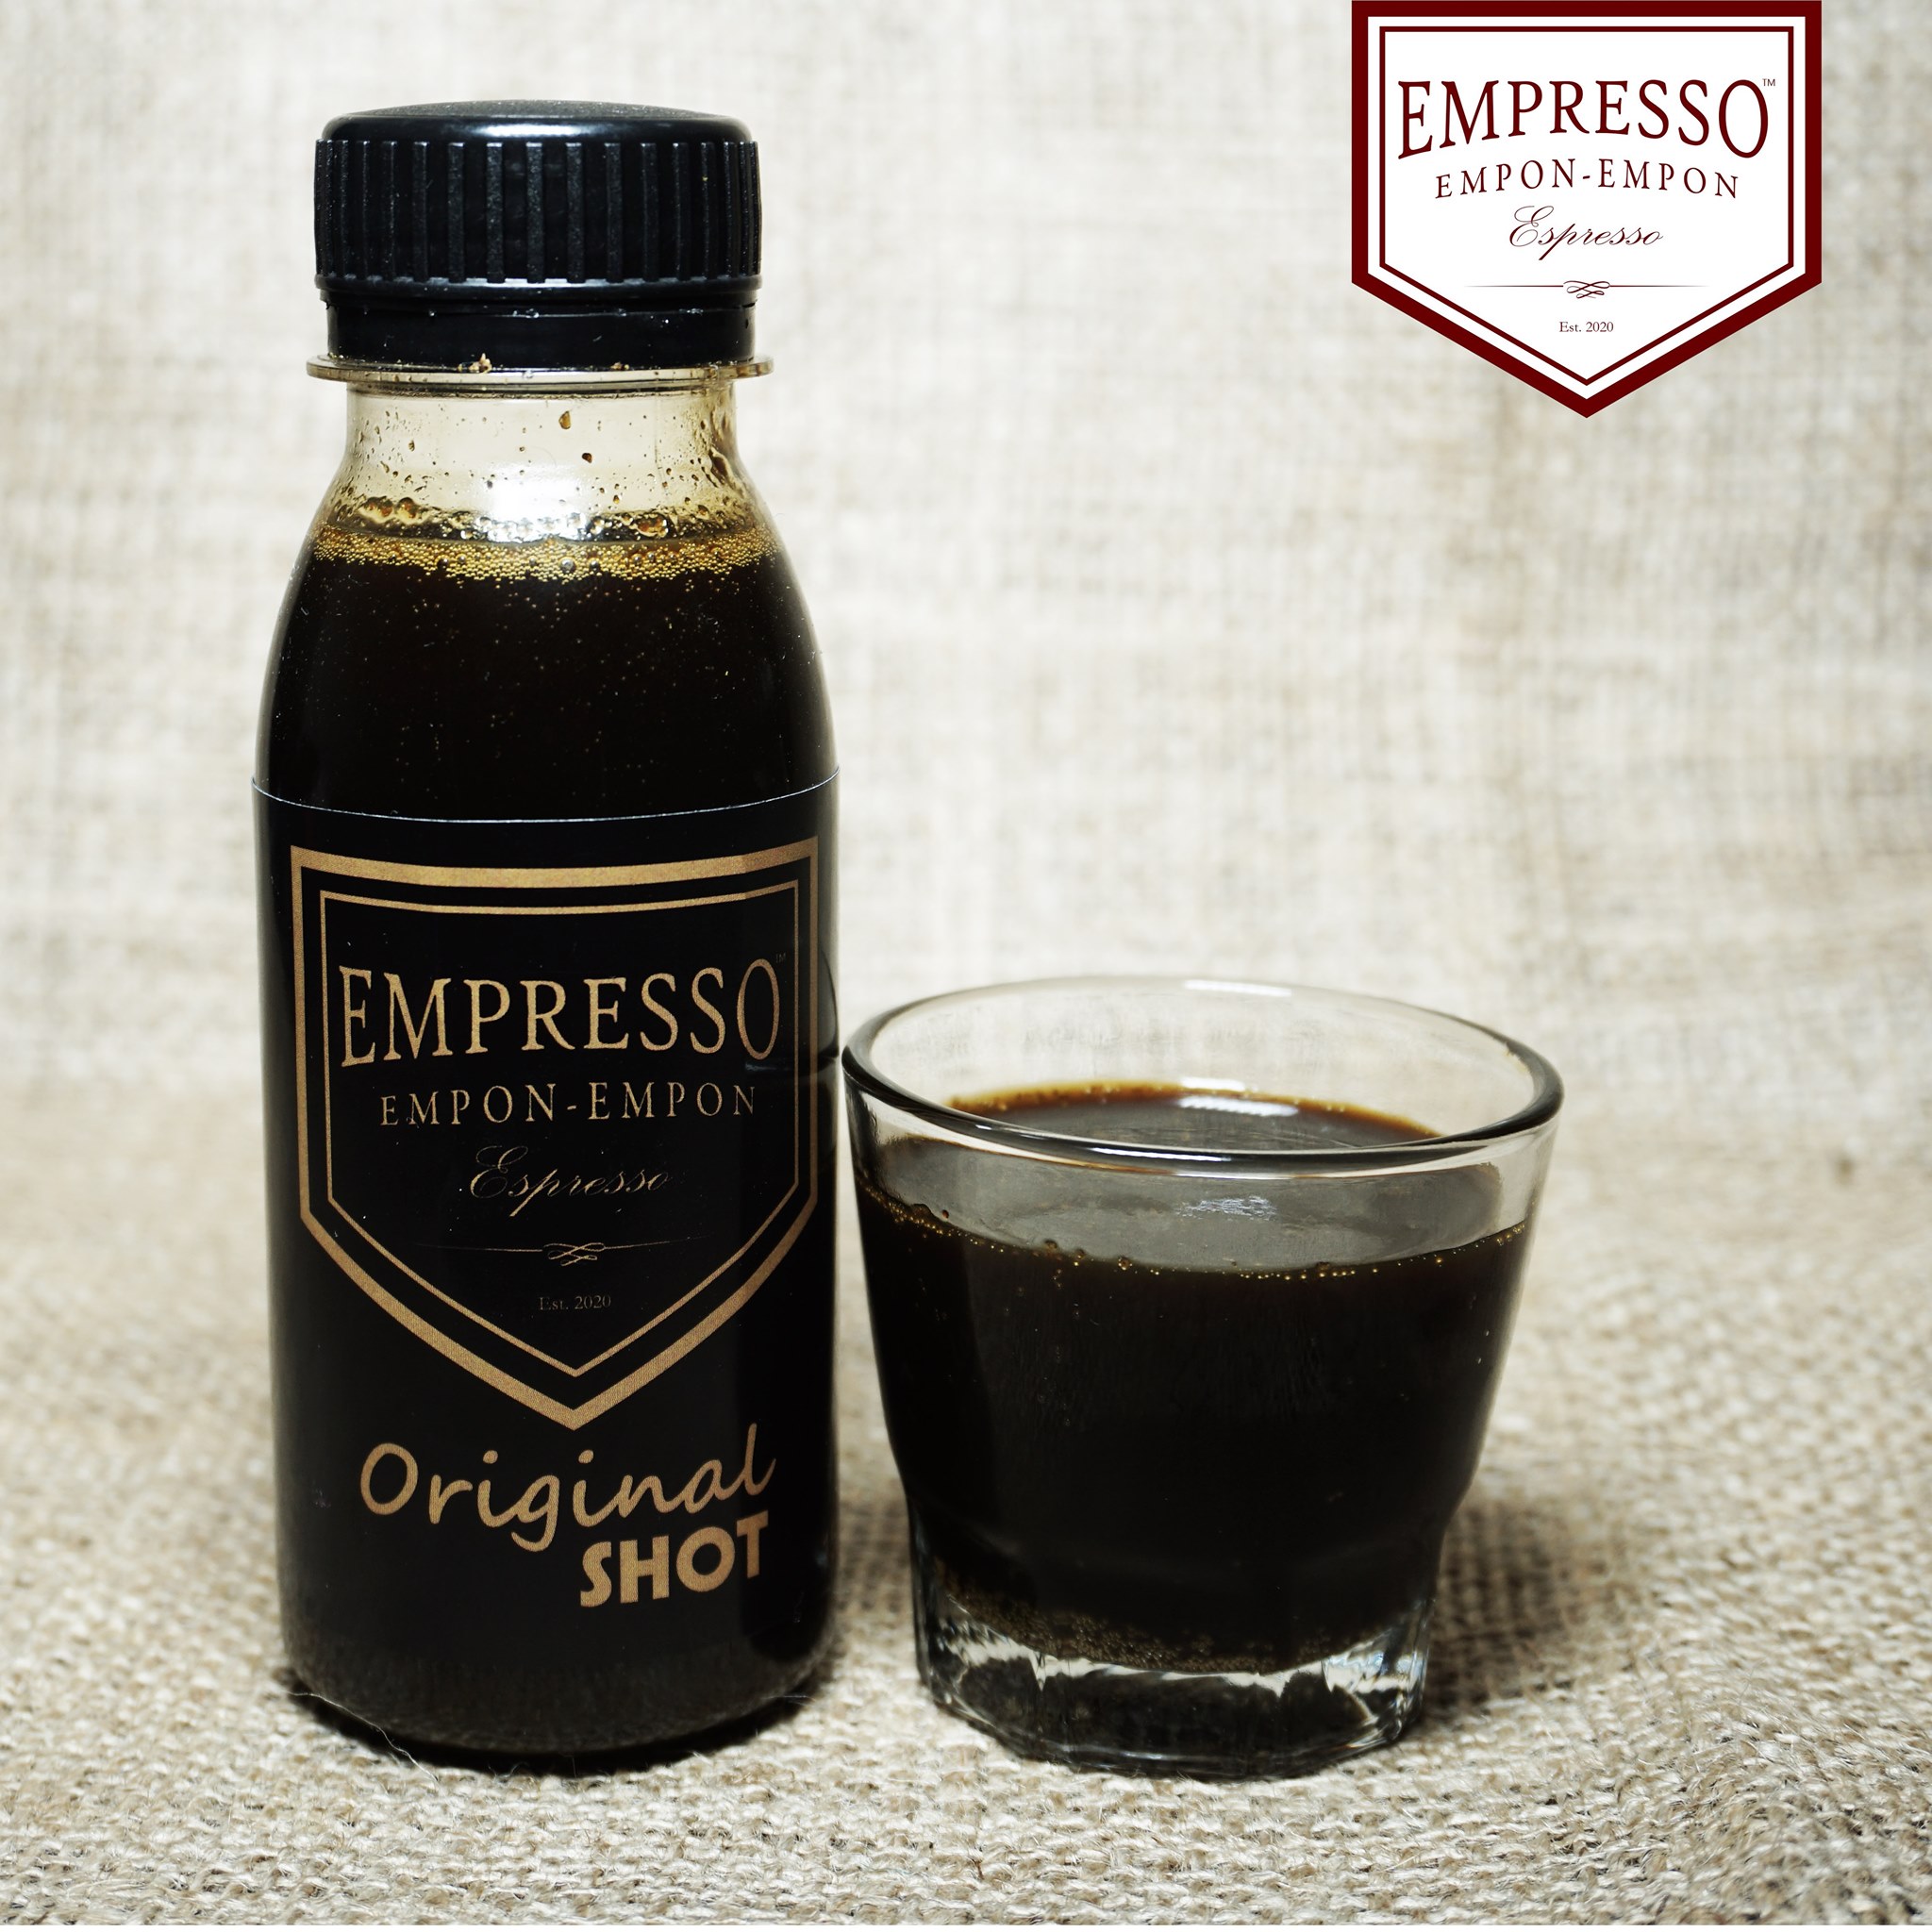 Empresso Original Shot - Minuman Sehat Dari Bangun-Bangun dengan khasiat luar biasa